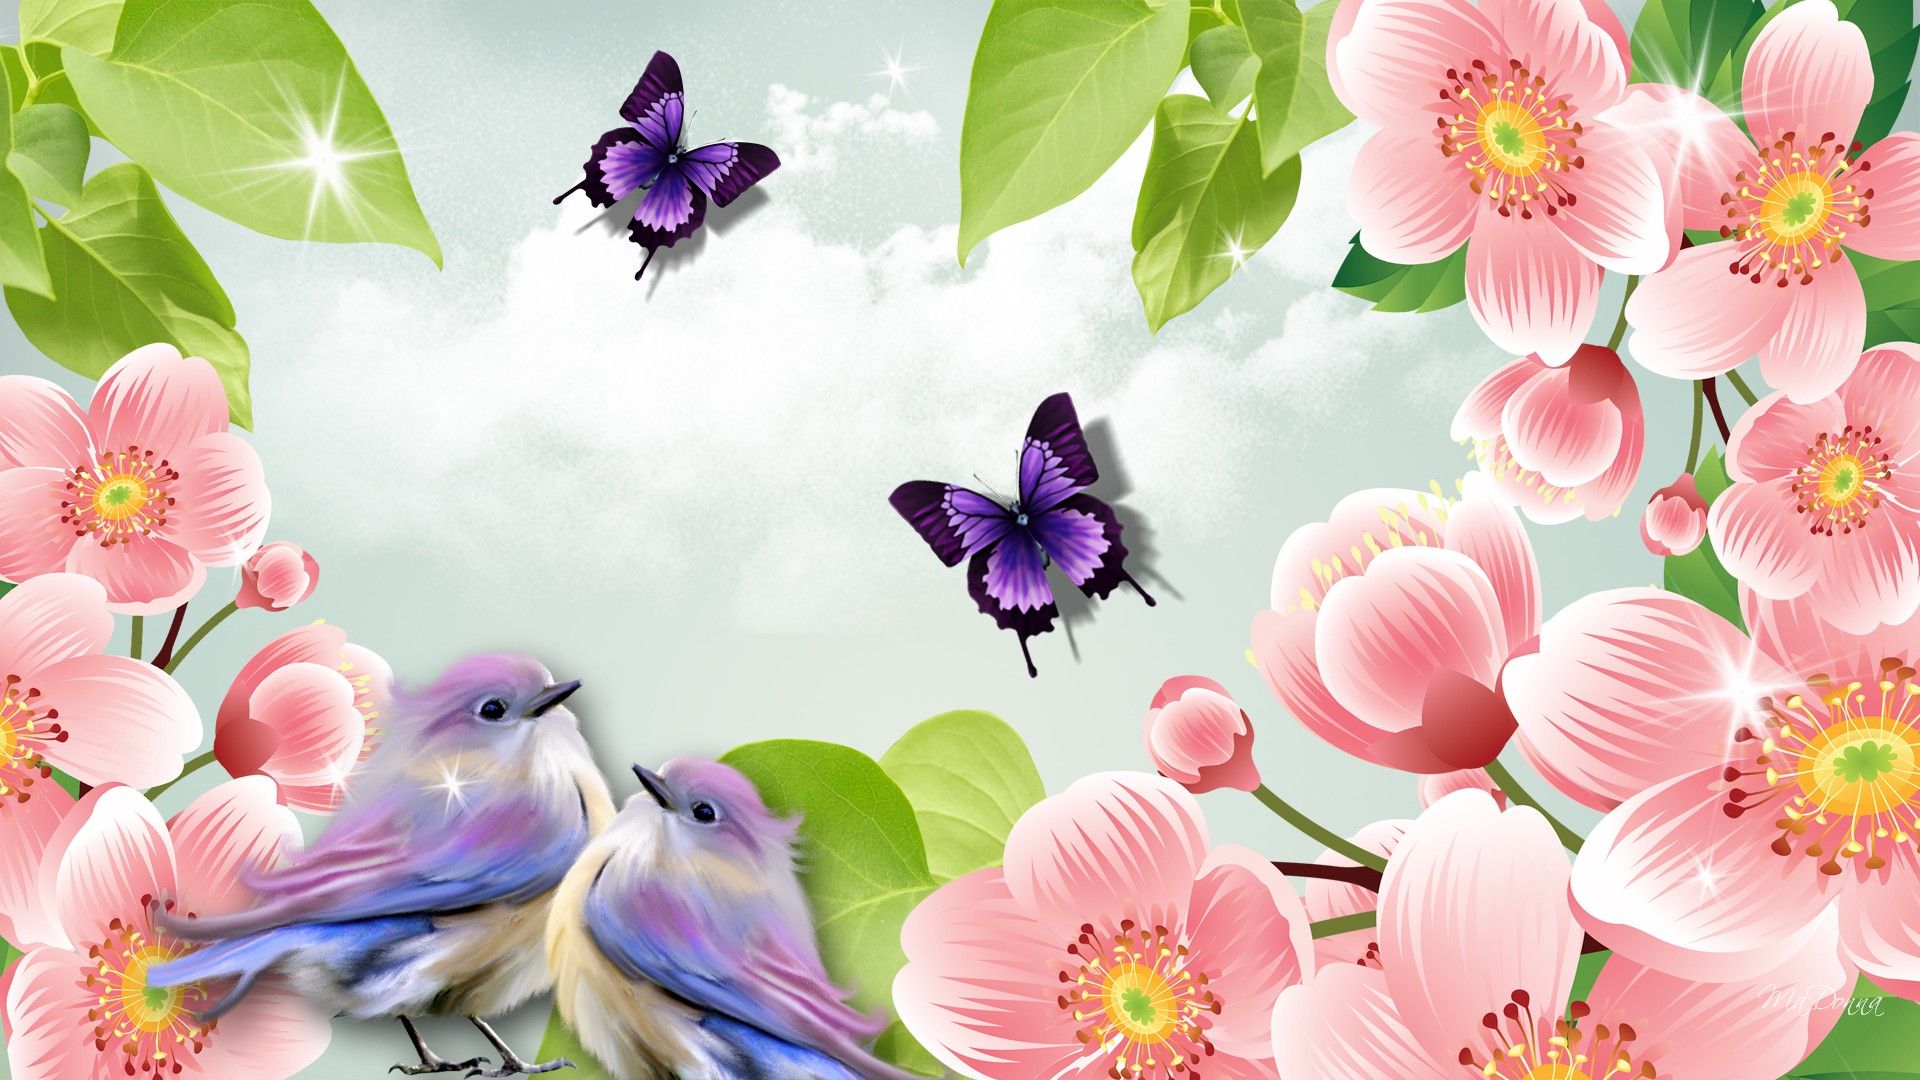 Image For Cute Spring Desktop Wallpaper The Background